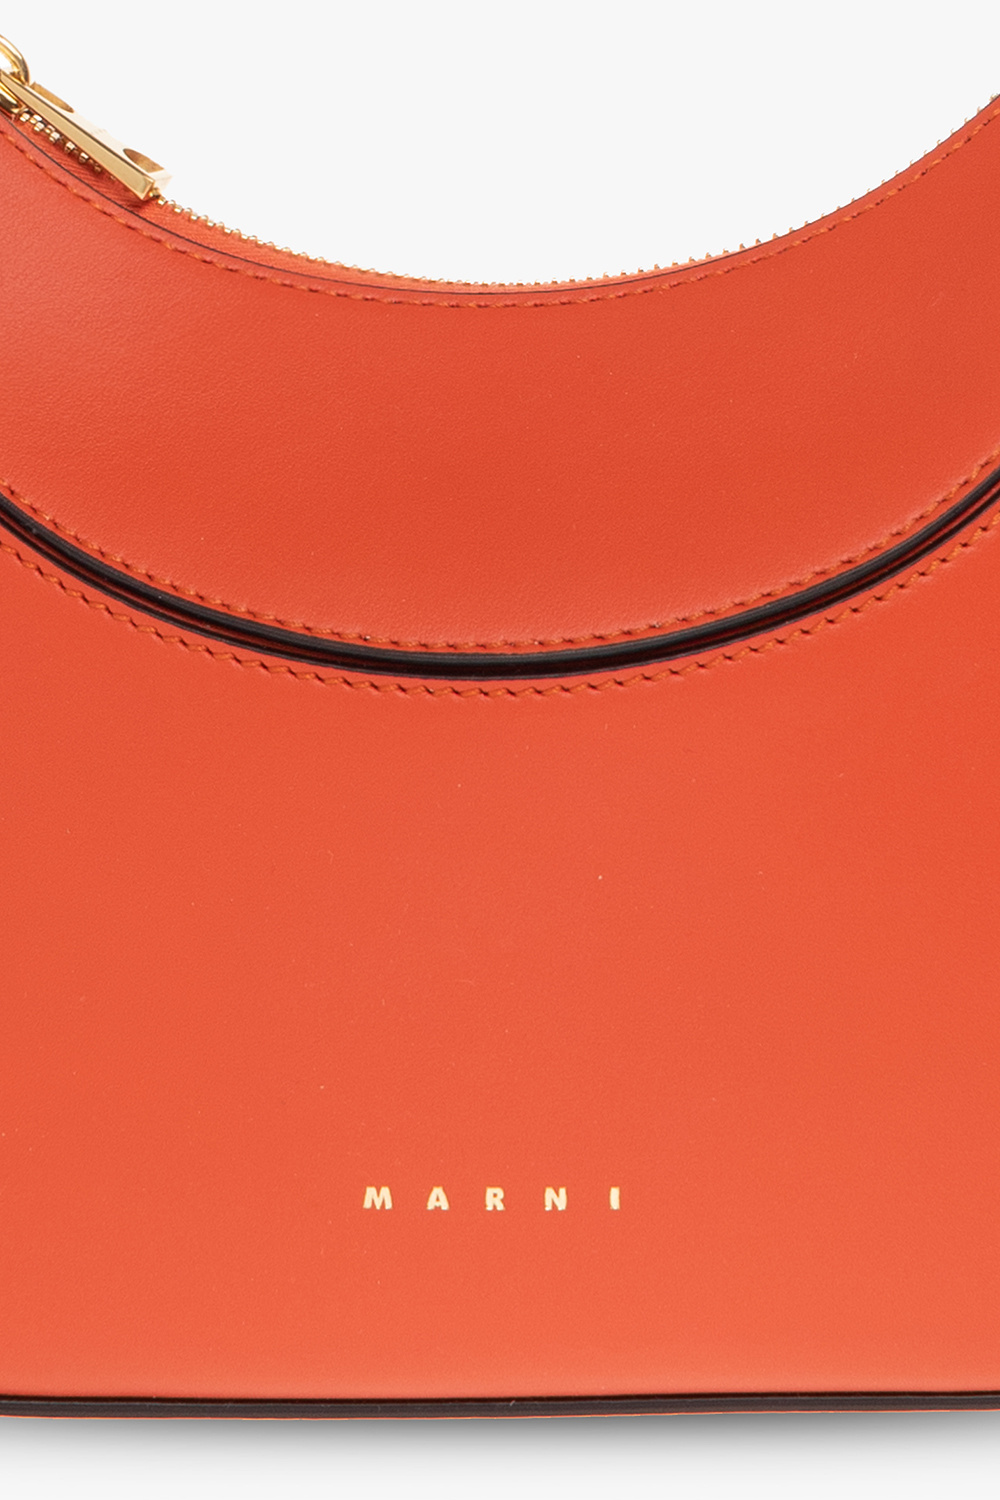 marni hooded ‘Milano Mini’ shoulder bag